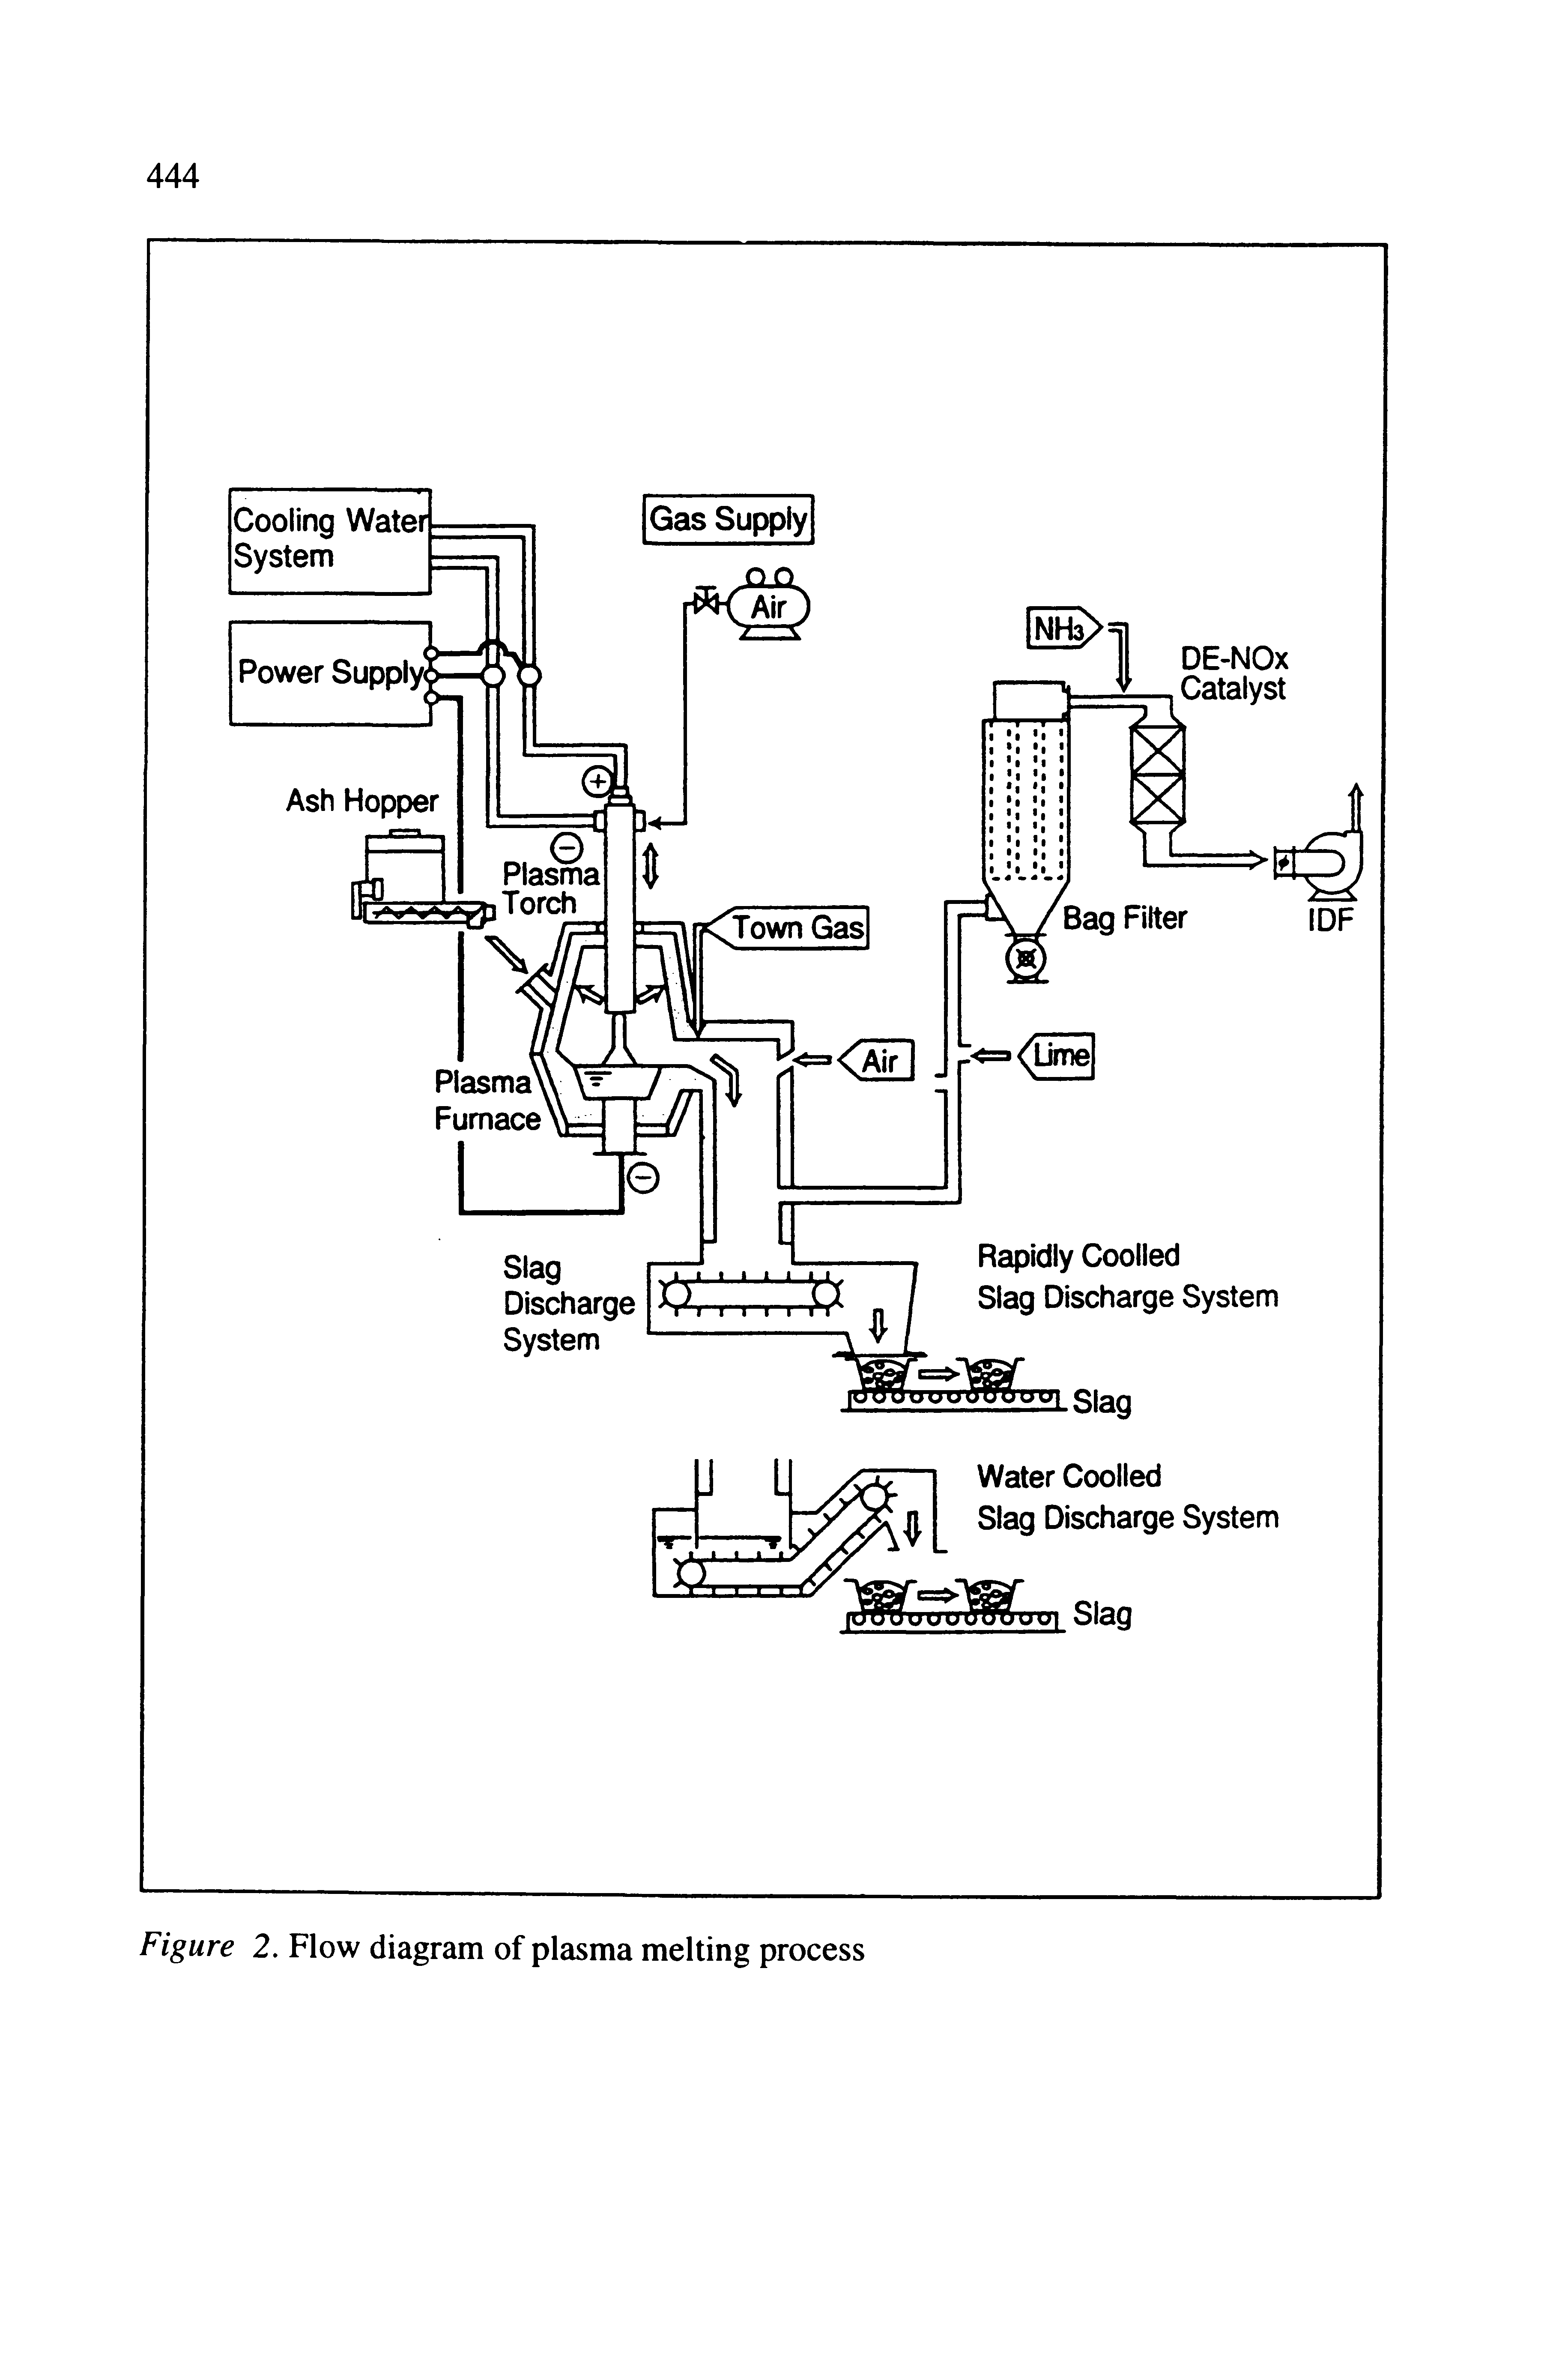 Figure 2. Flow diagram of plasma melting process...